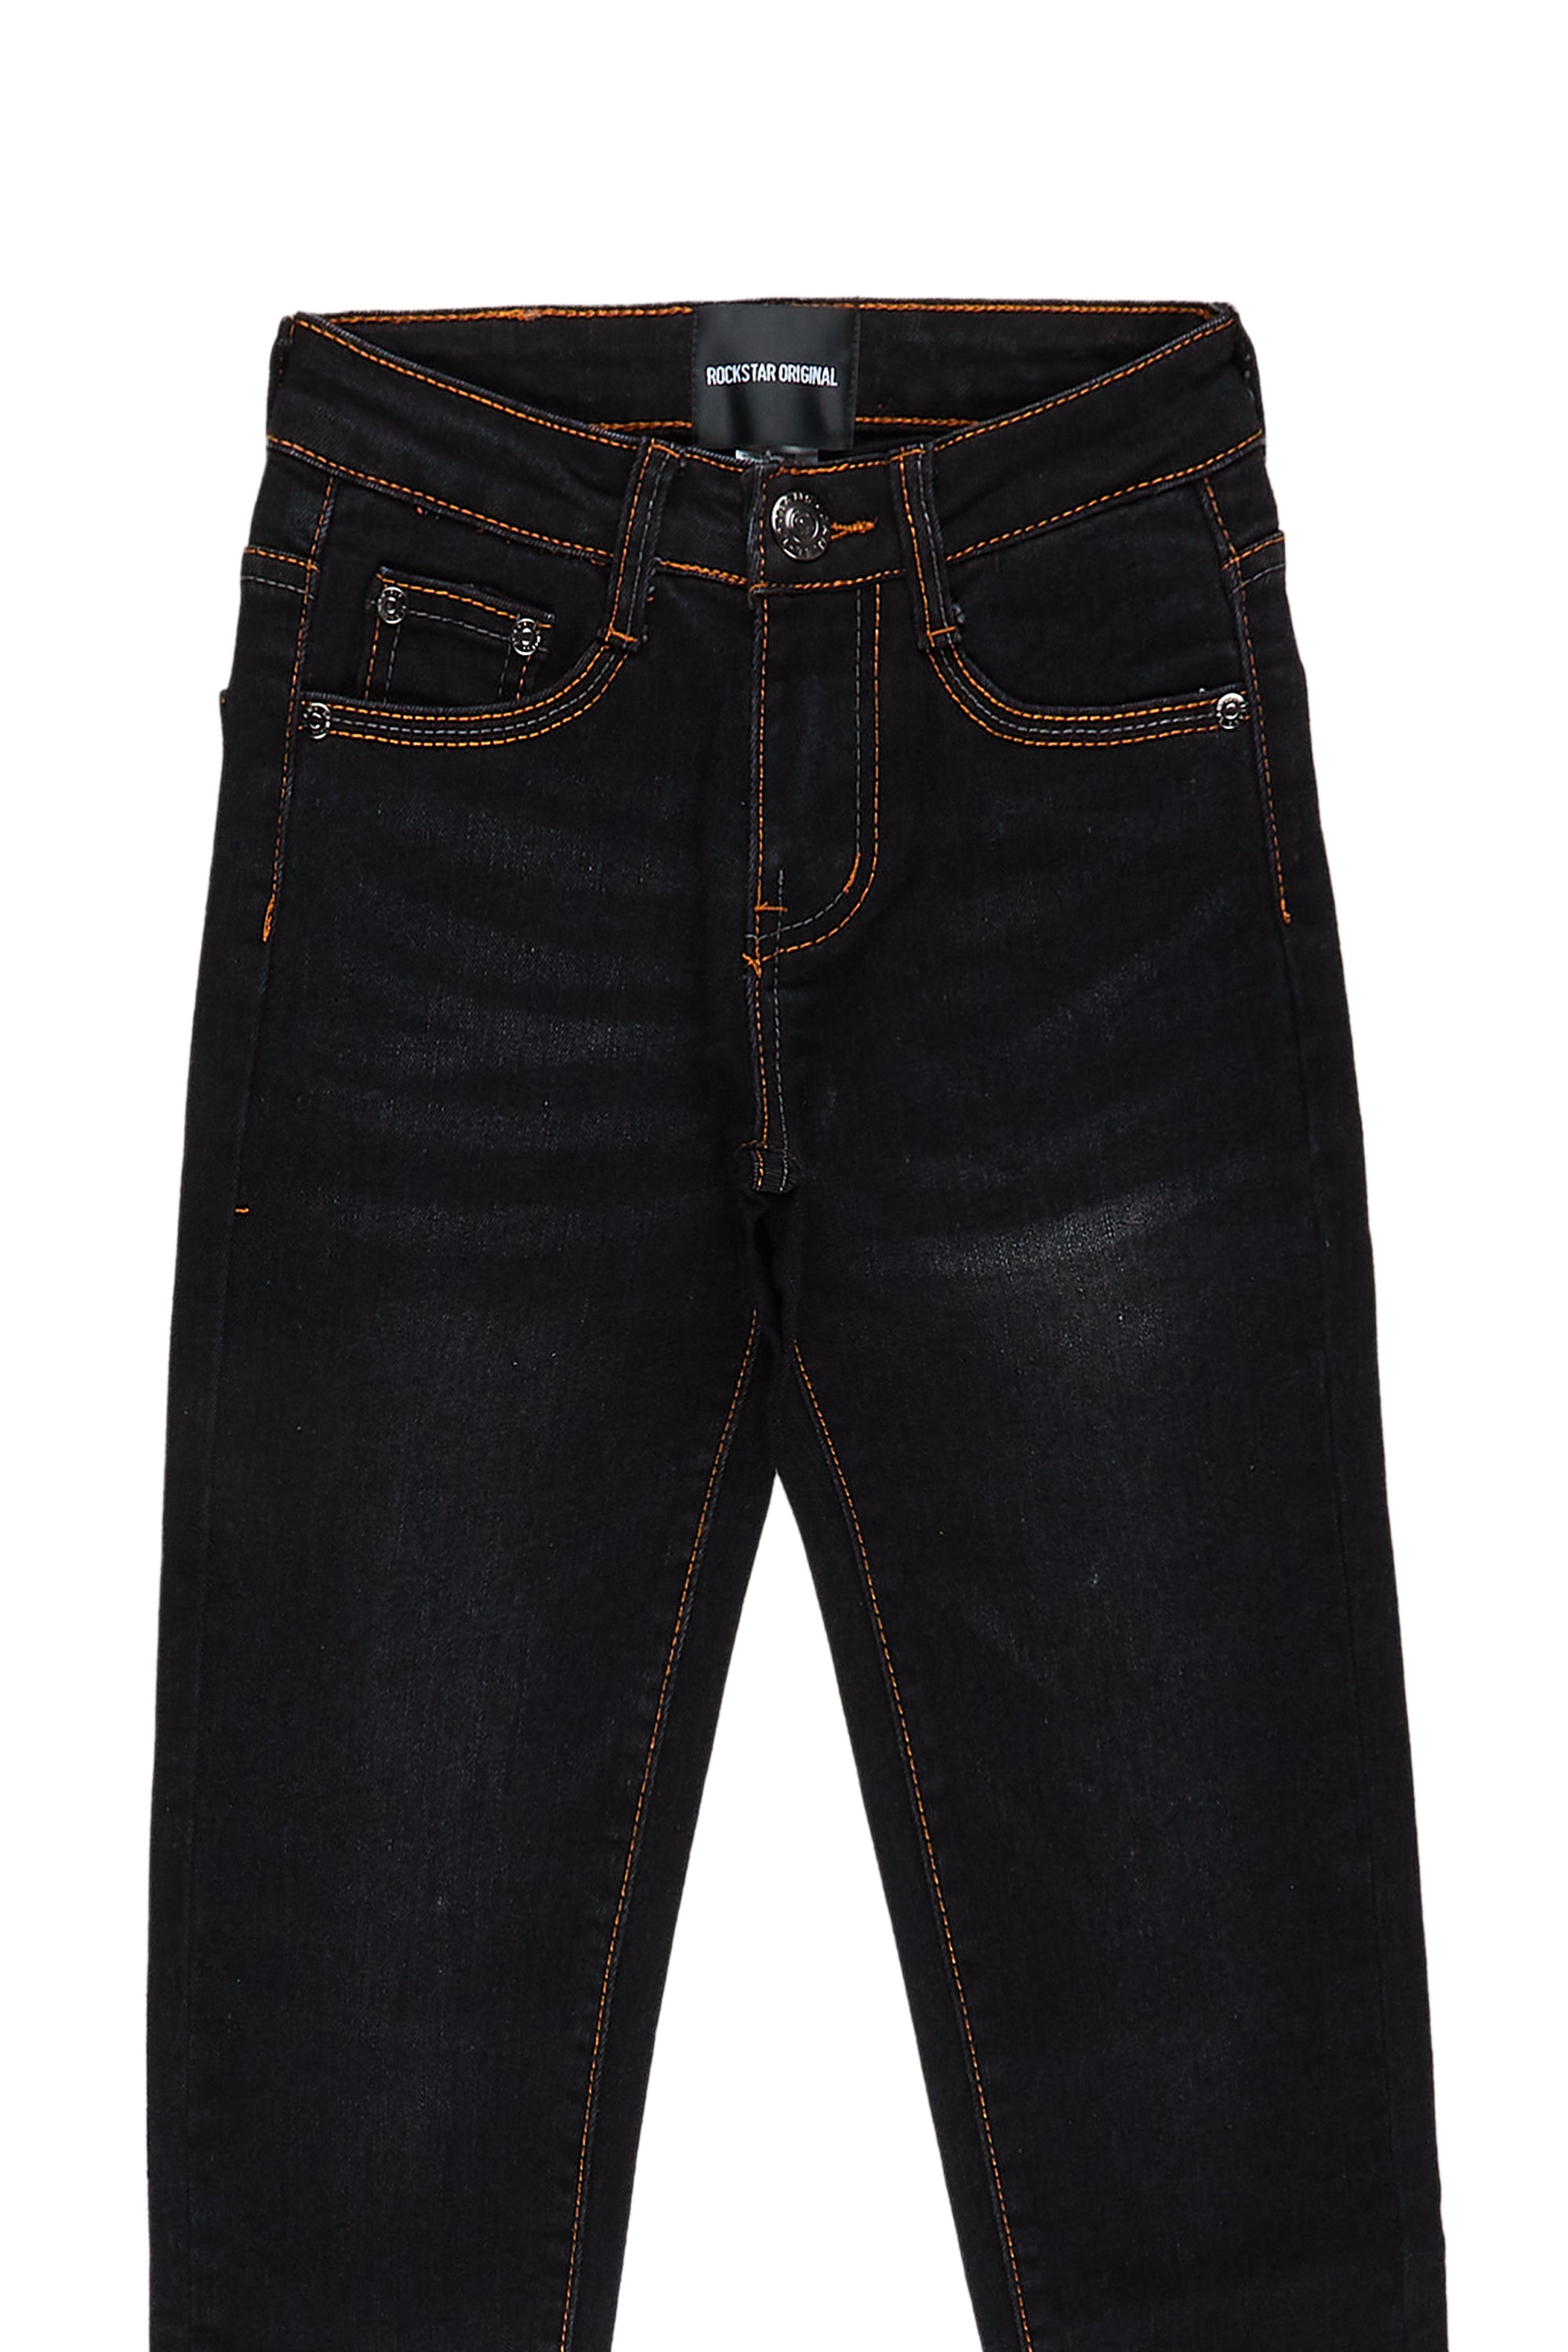 Boys Evander Black 5 Pocket Jean